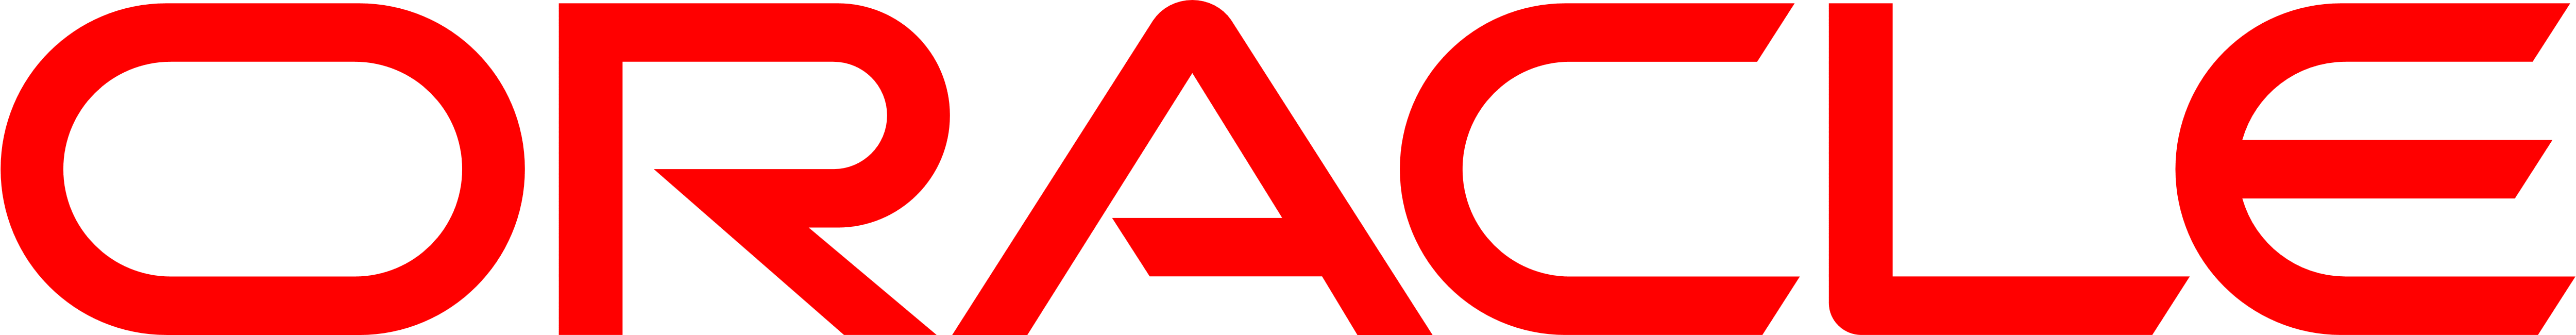 Oracle Corporation Logo - Oracle – Logos Download